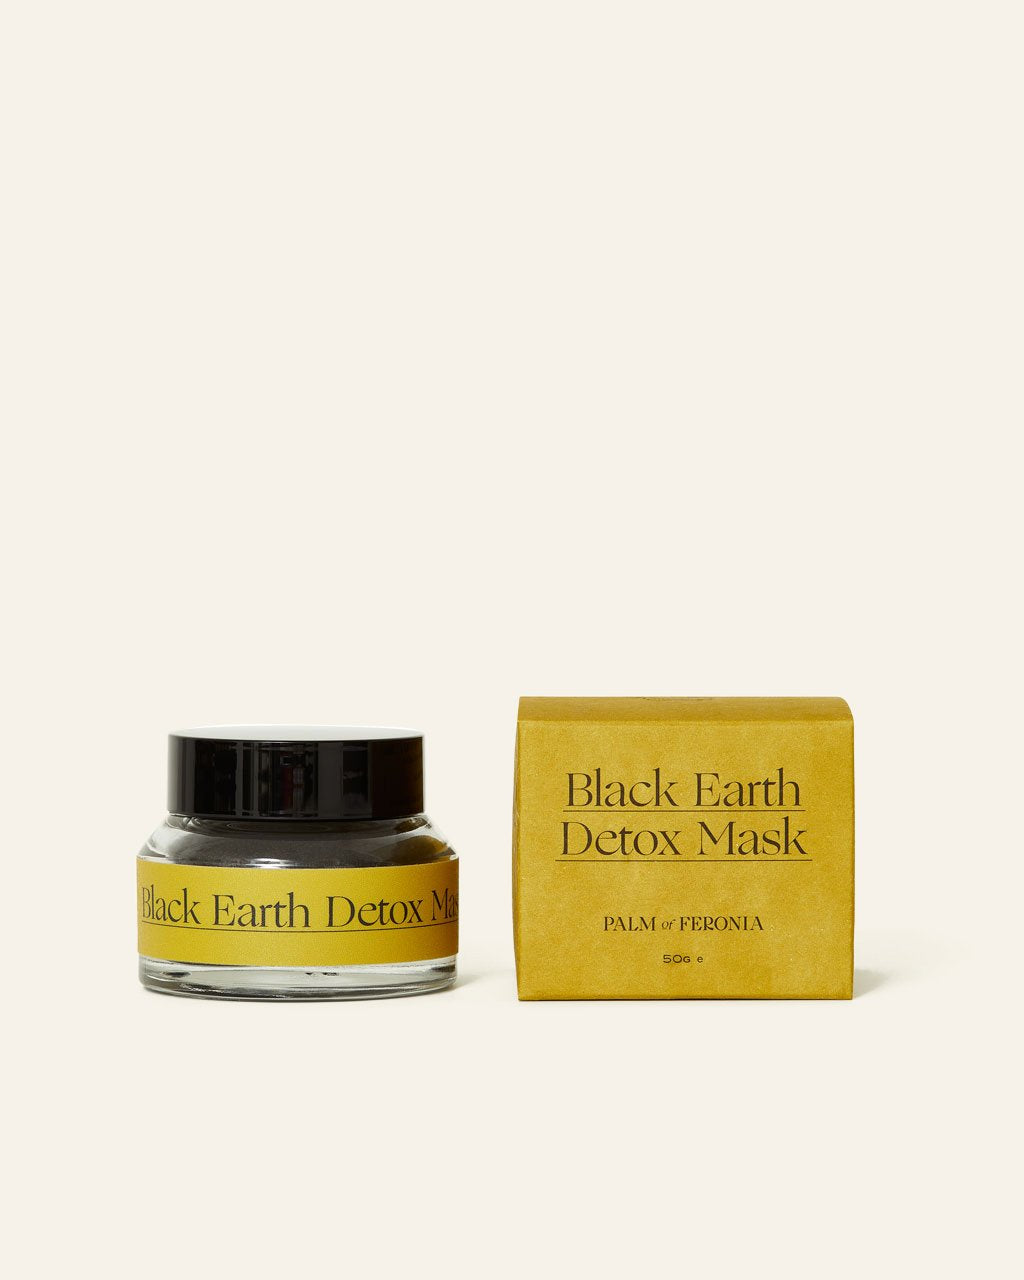 Black Earth Detox Mask